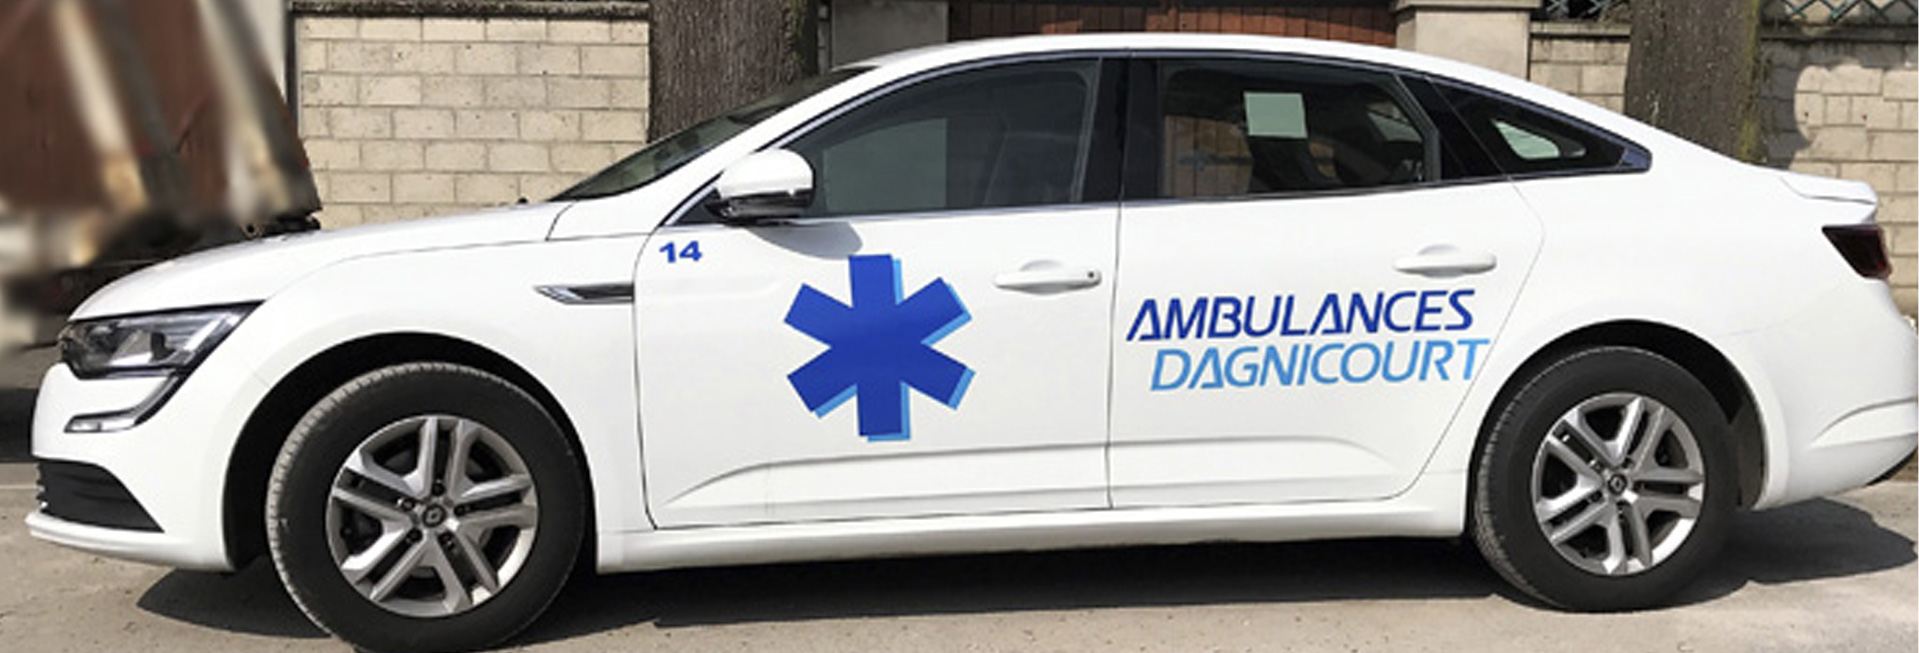 Slide Ambulances Dagnicourt Chauny